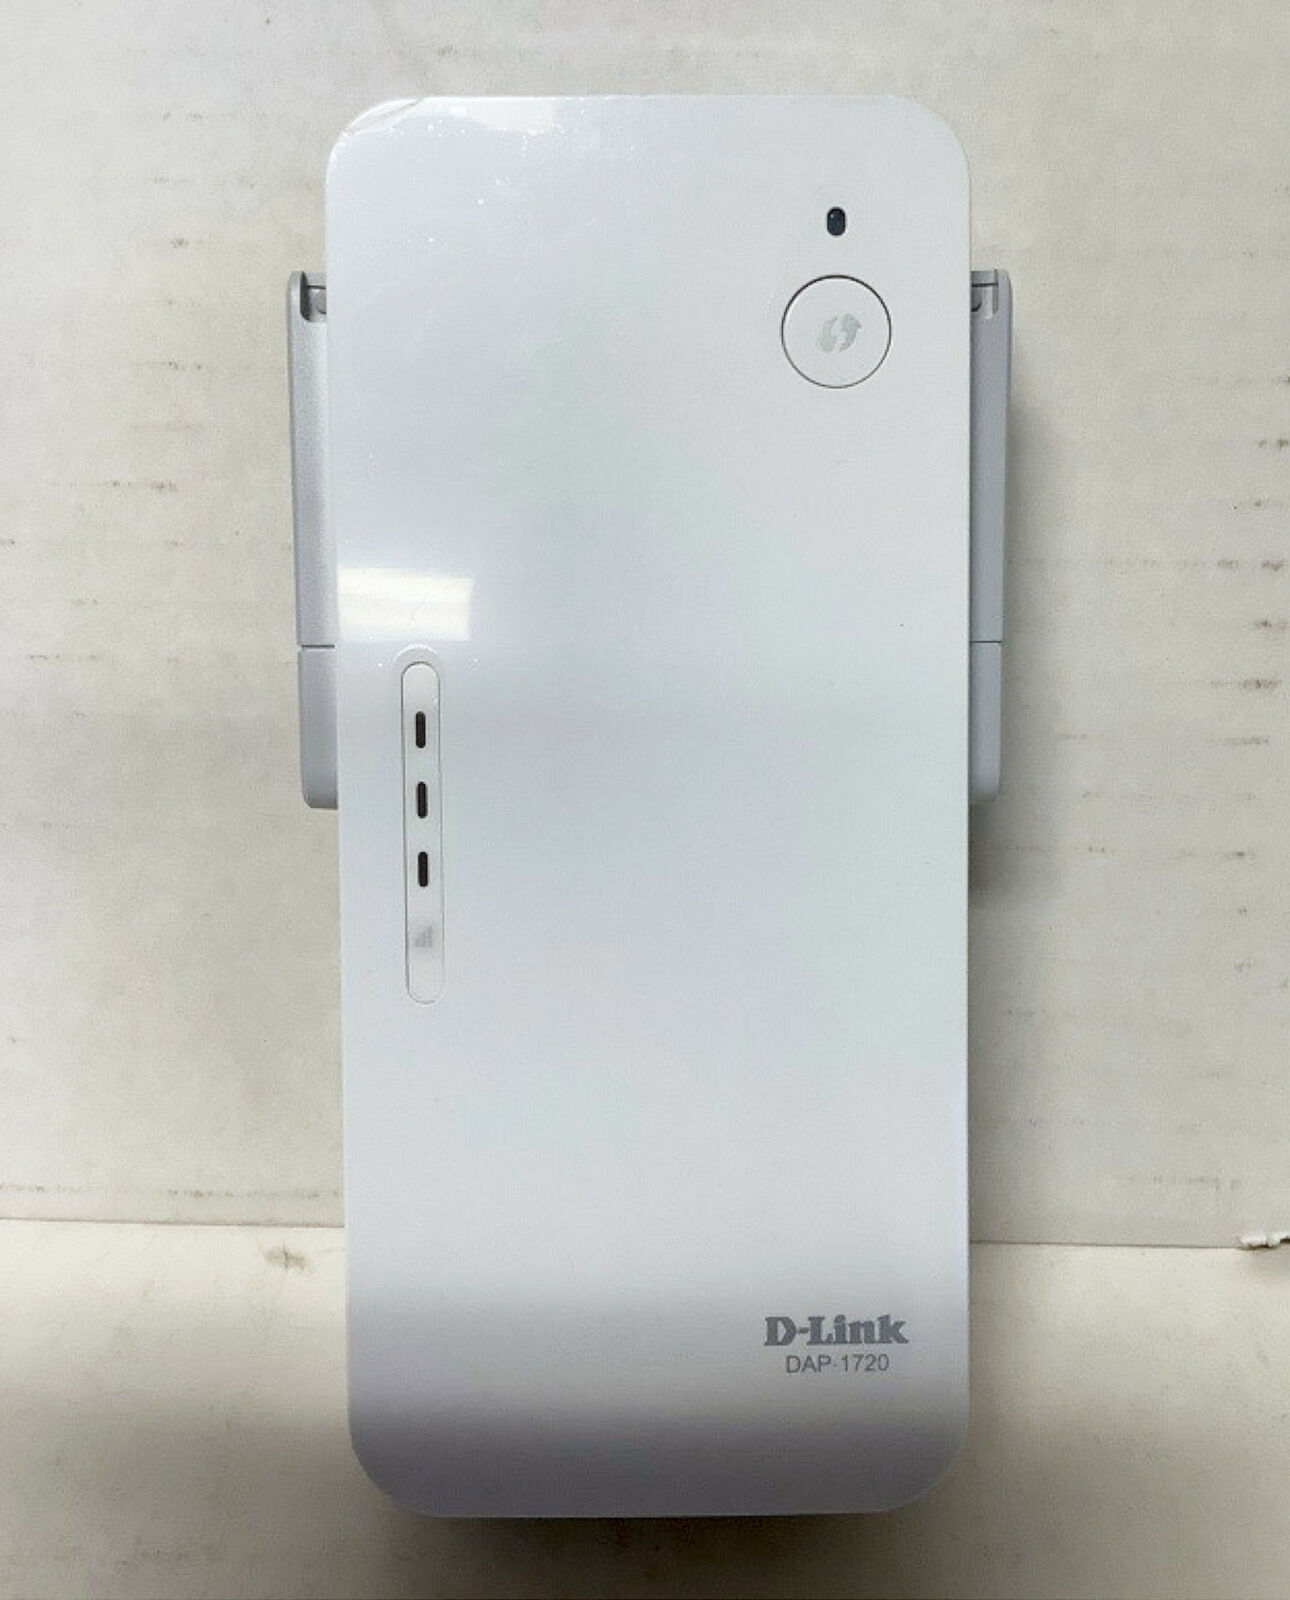 D-Link DAP-1720 AC1750 Dual Band Wi-Fi Wireless Range Extender White 802.11n/g/a